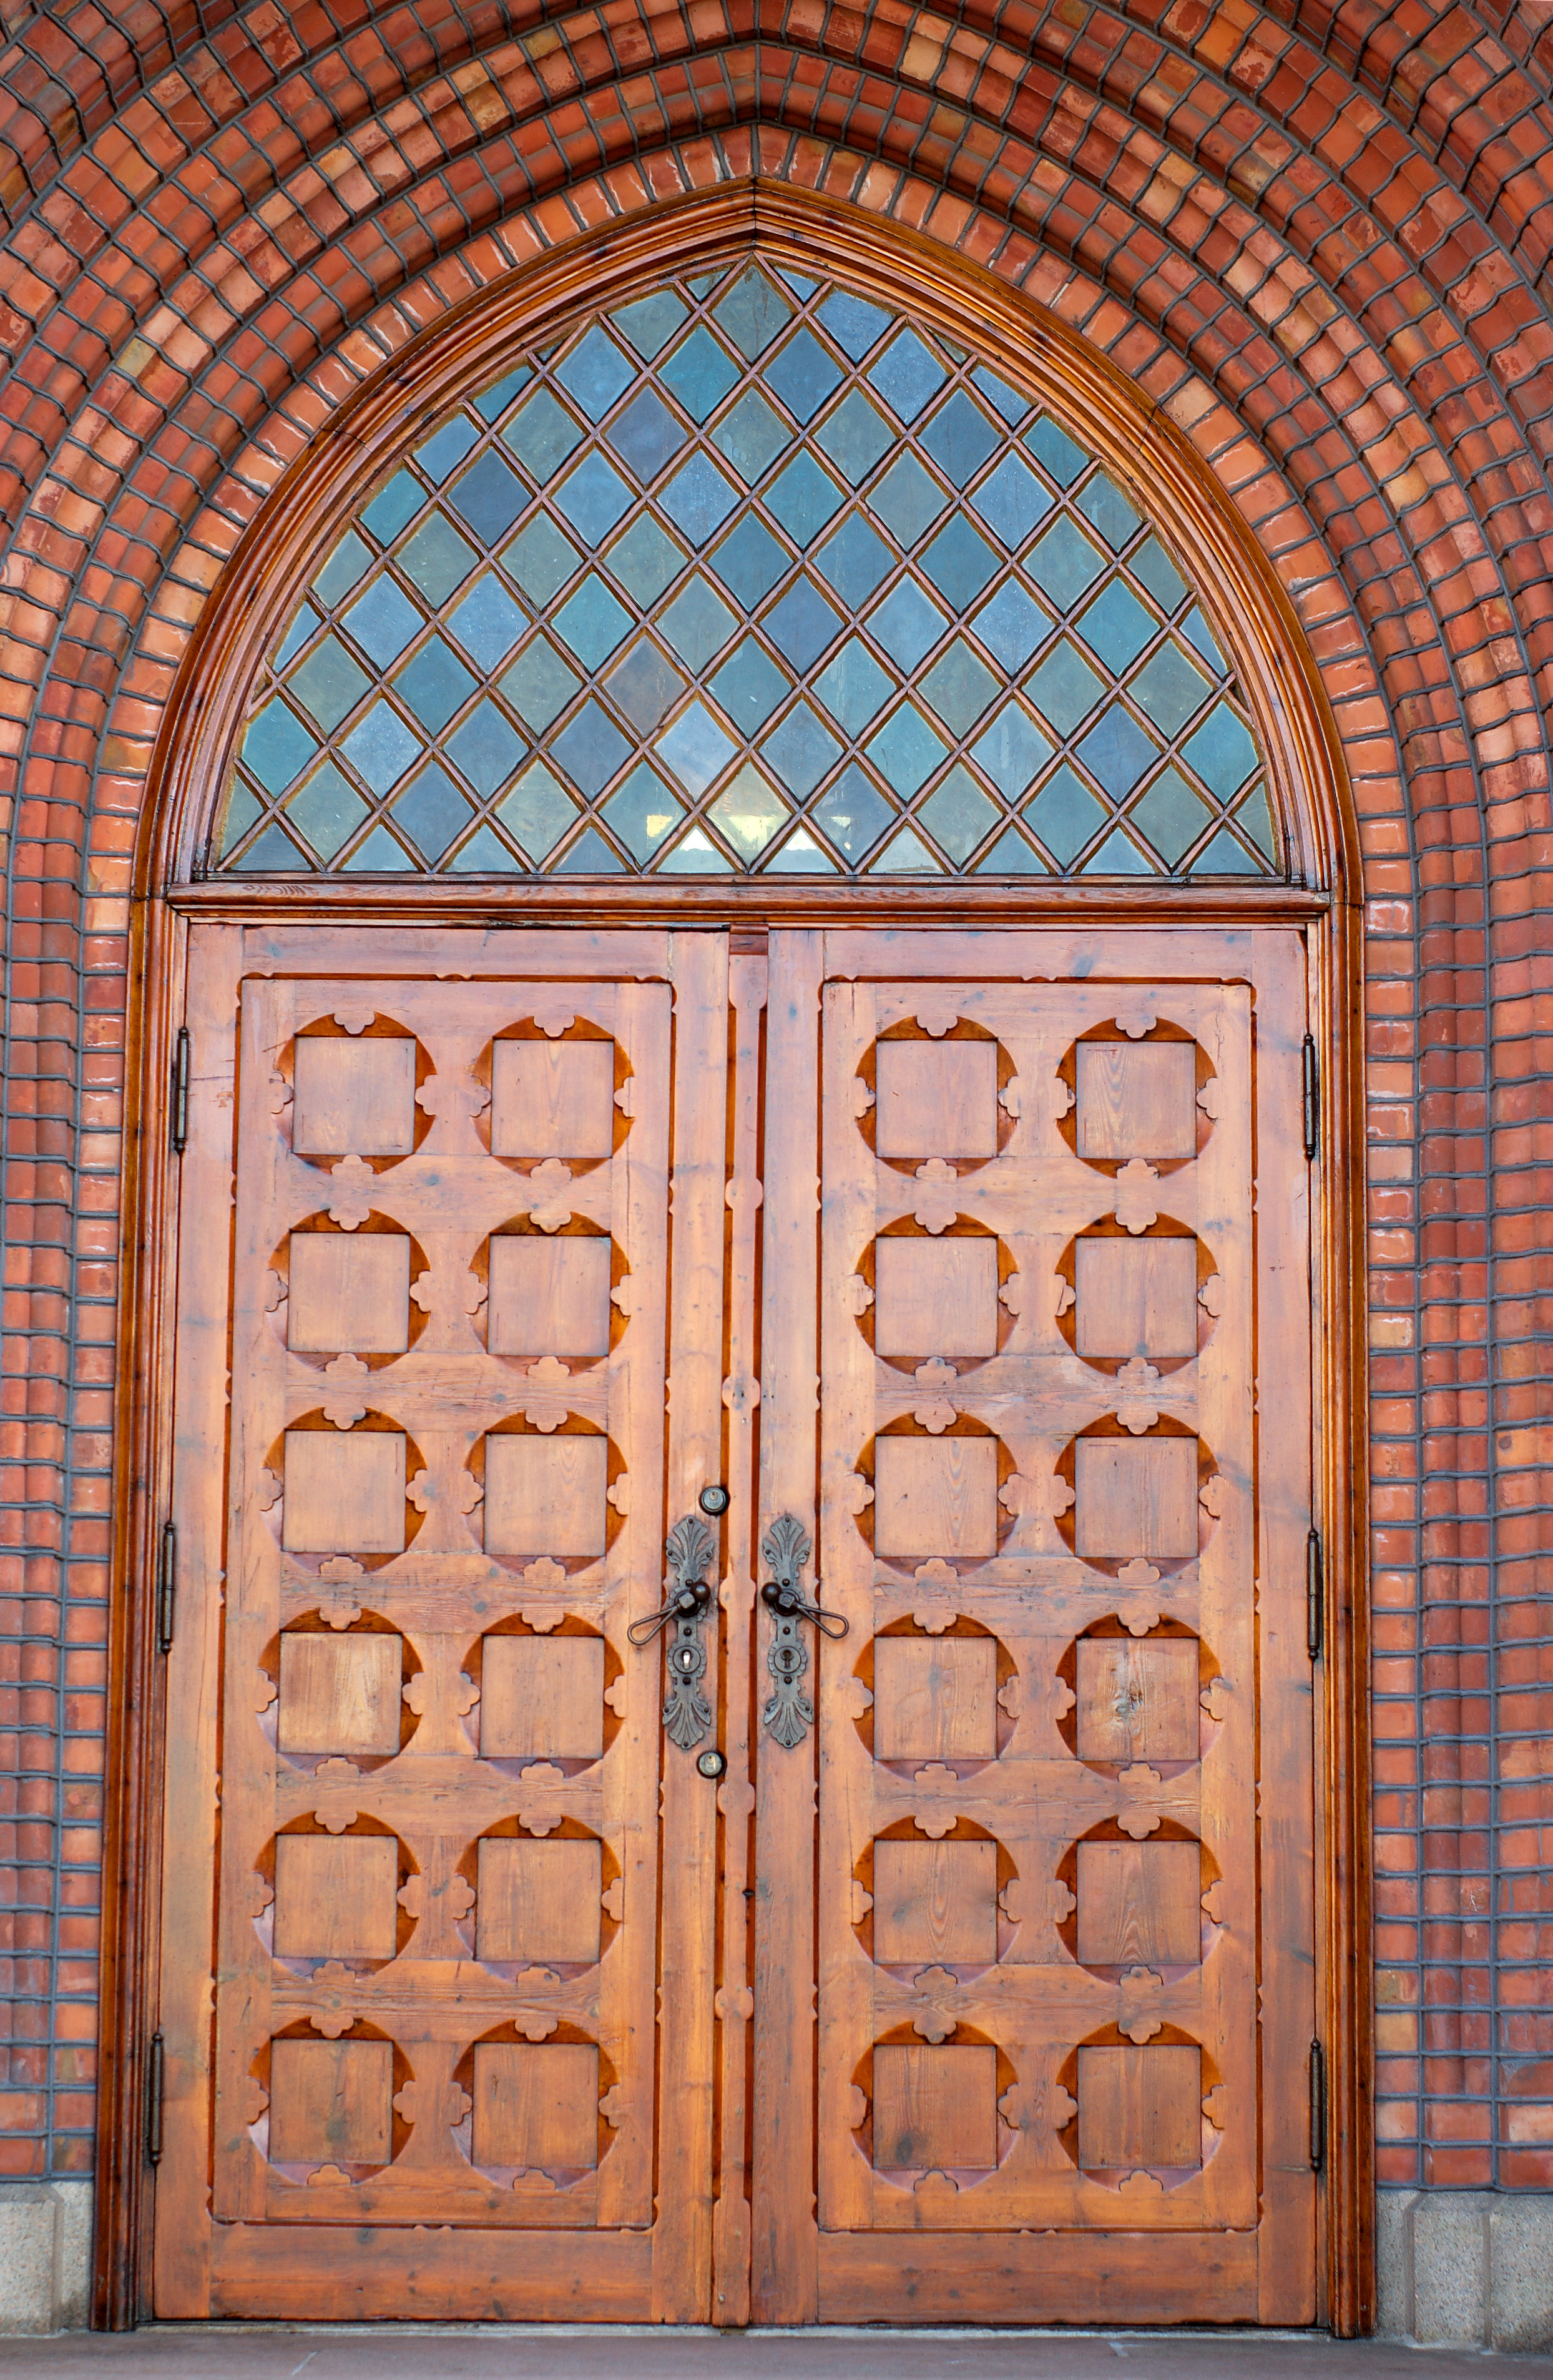 File:Uranienborg church front door.jpg - Wikimedia Commons